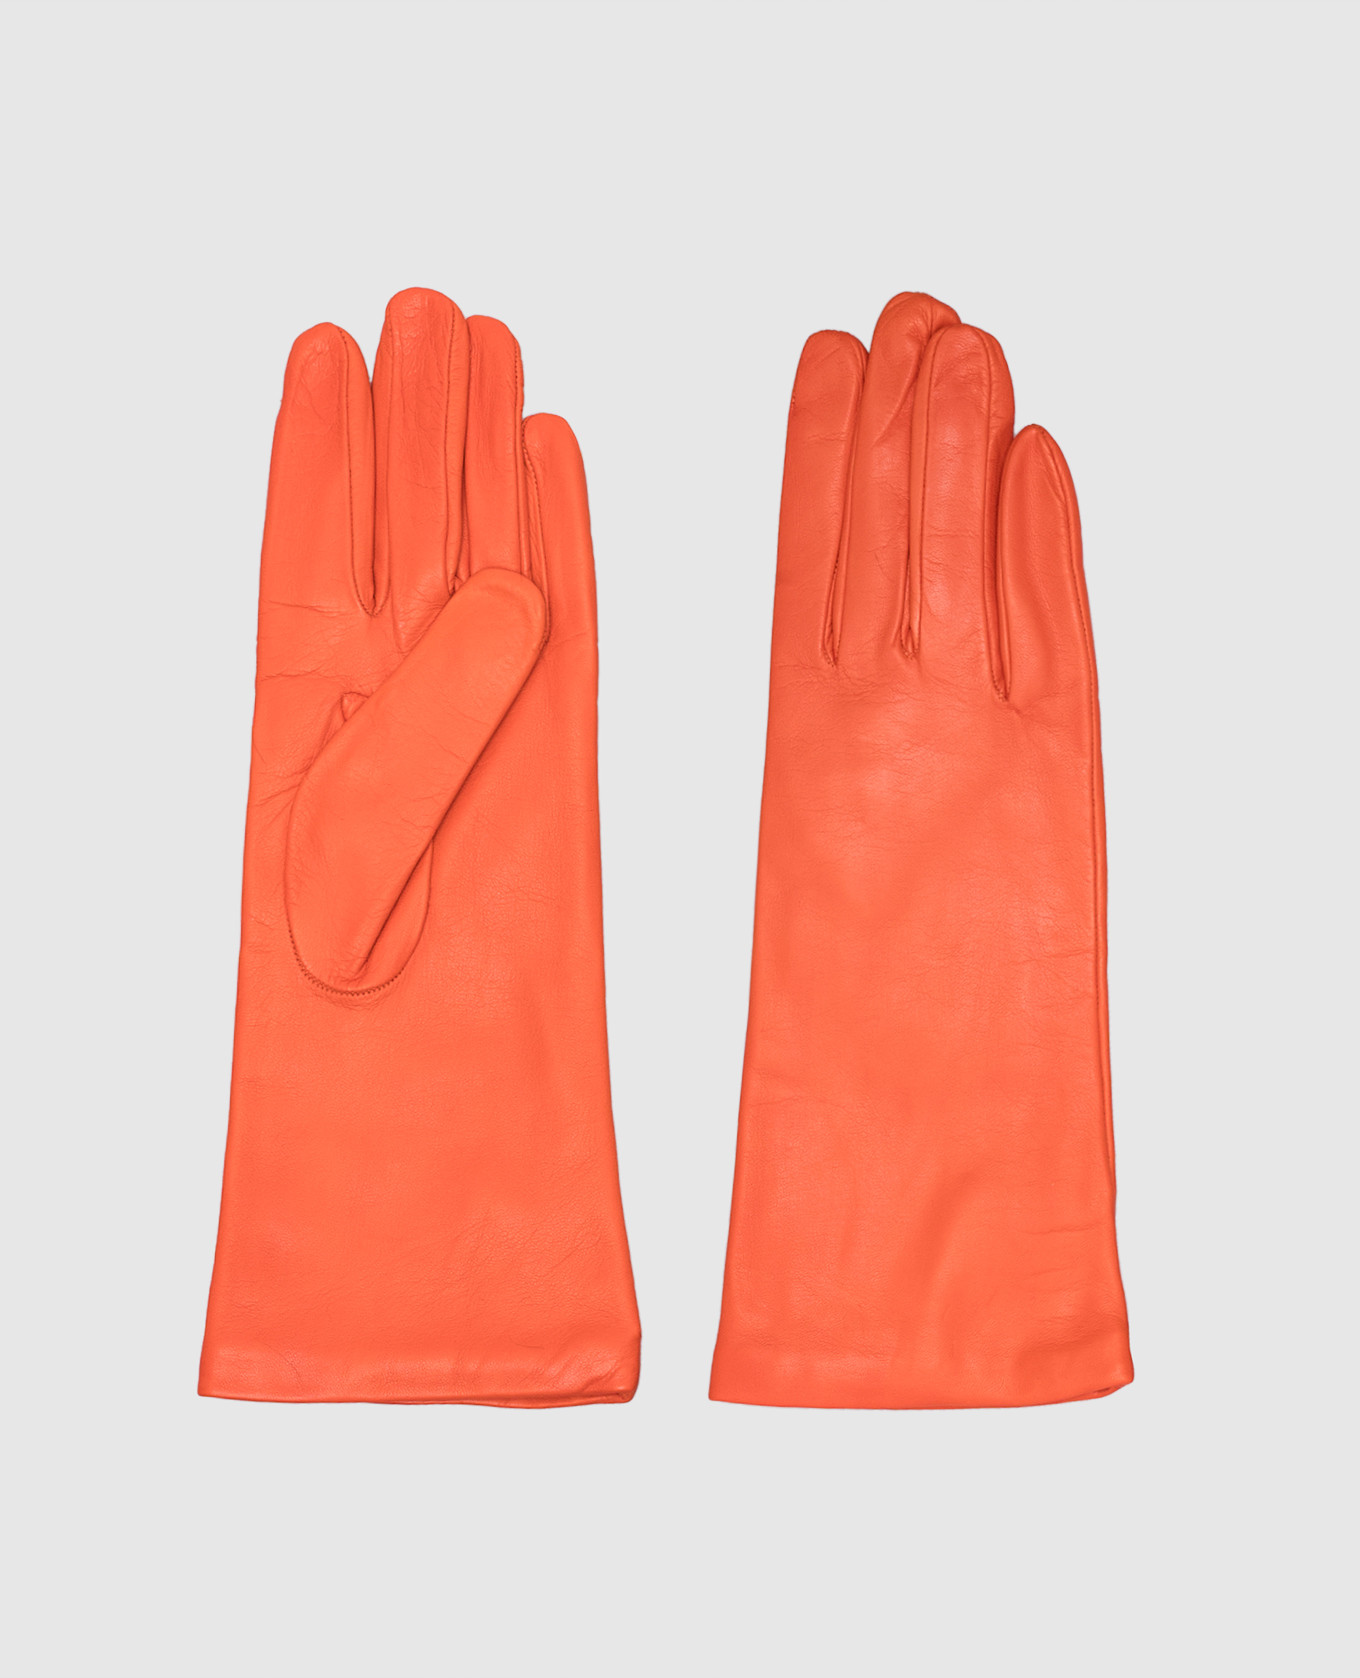 Orange leather gloves